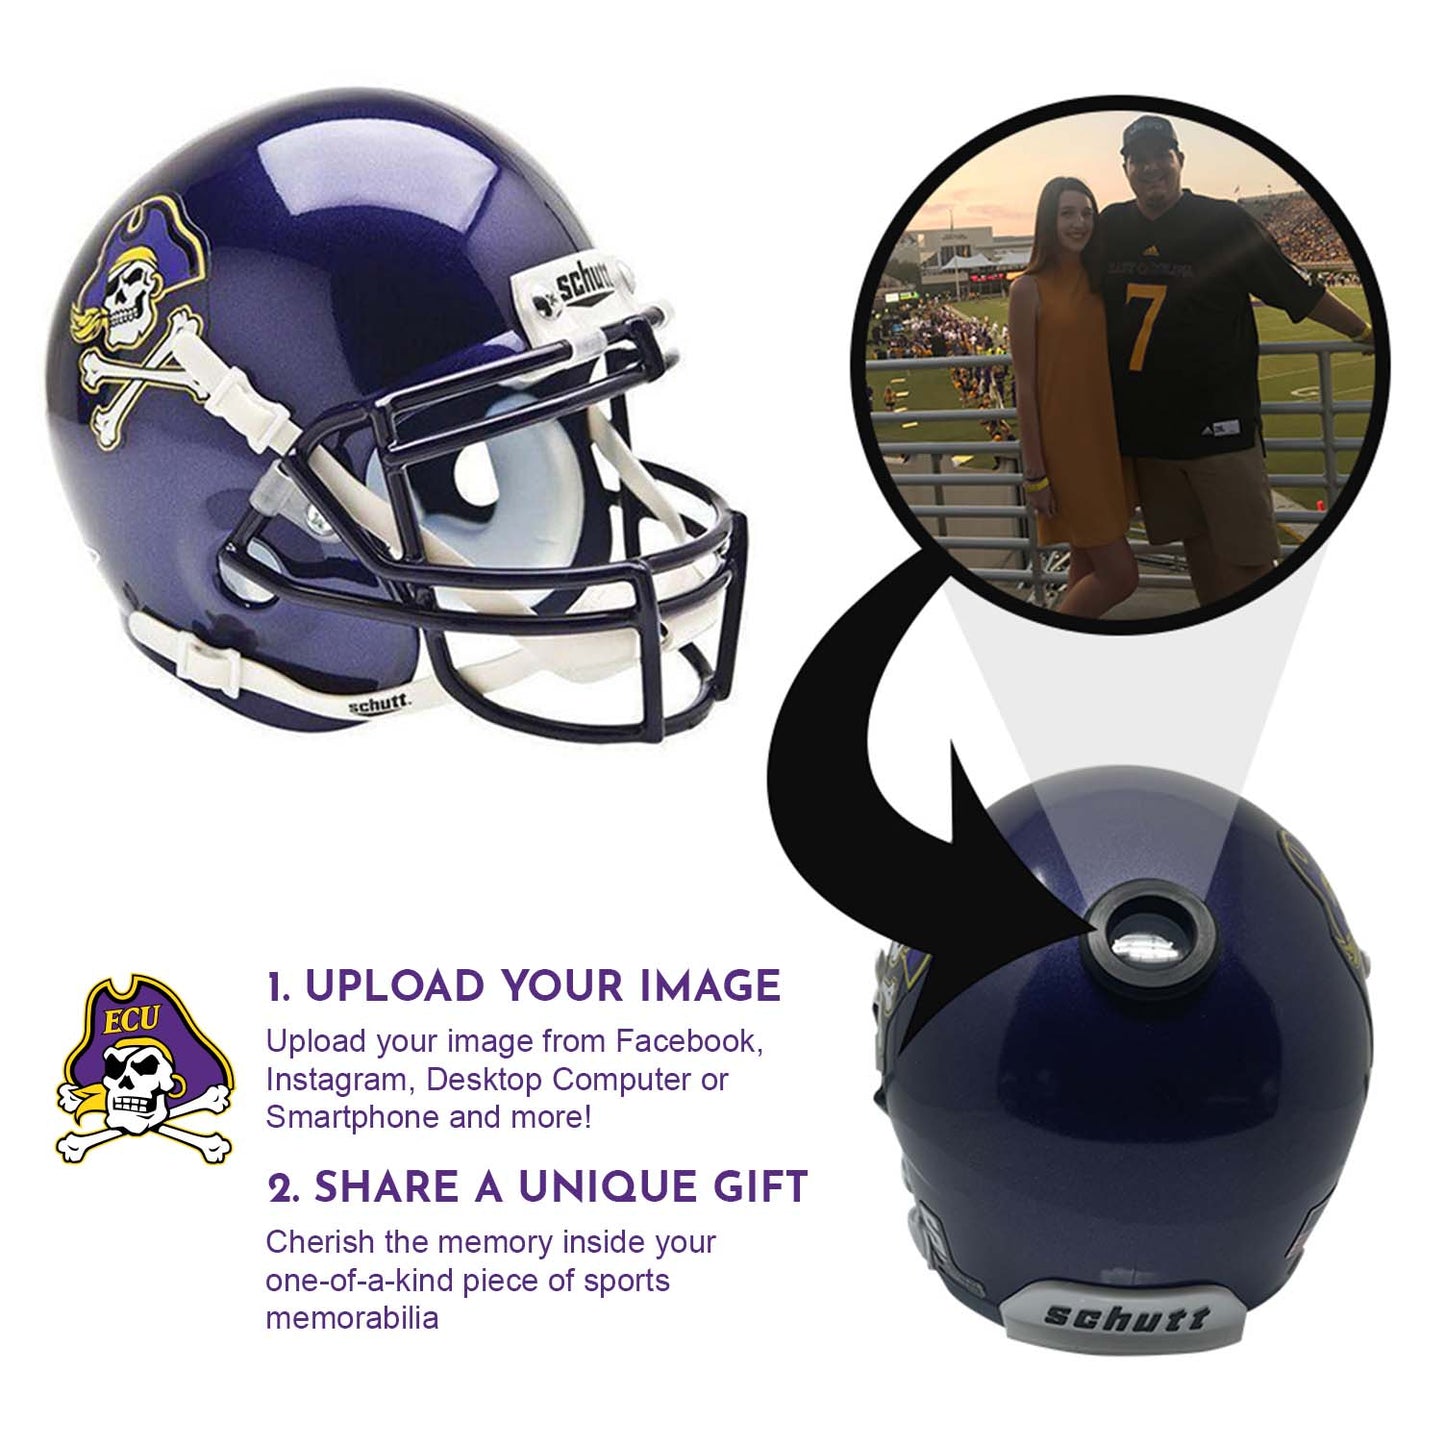 East Carolina Pirates College Football Collectible Schutt Mini Helmet - Picture Inside - FANZ Collectibles